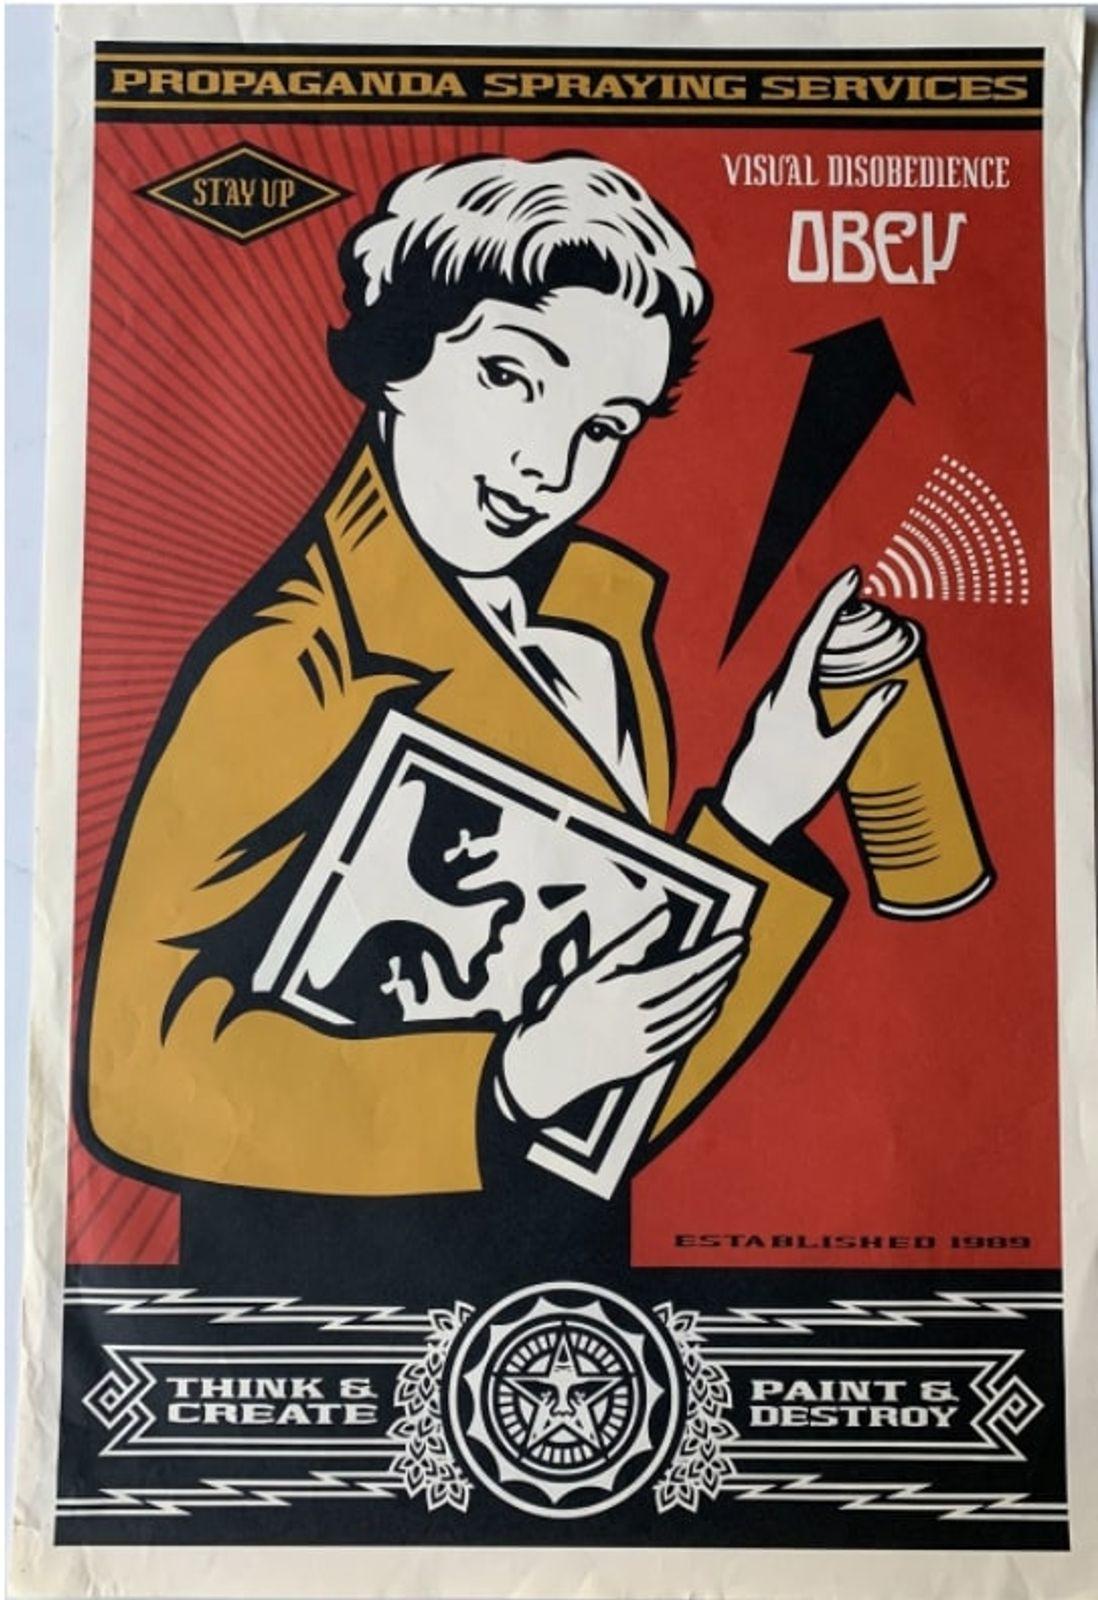 Shepard Fairey Portrait Print - Propaganda Spraying Services